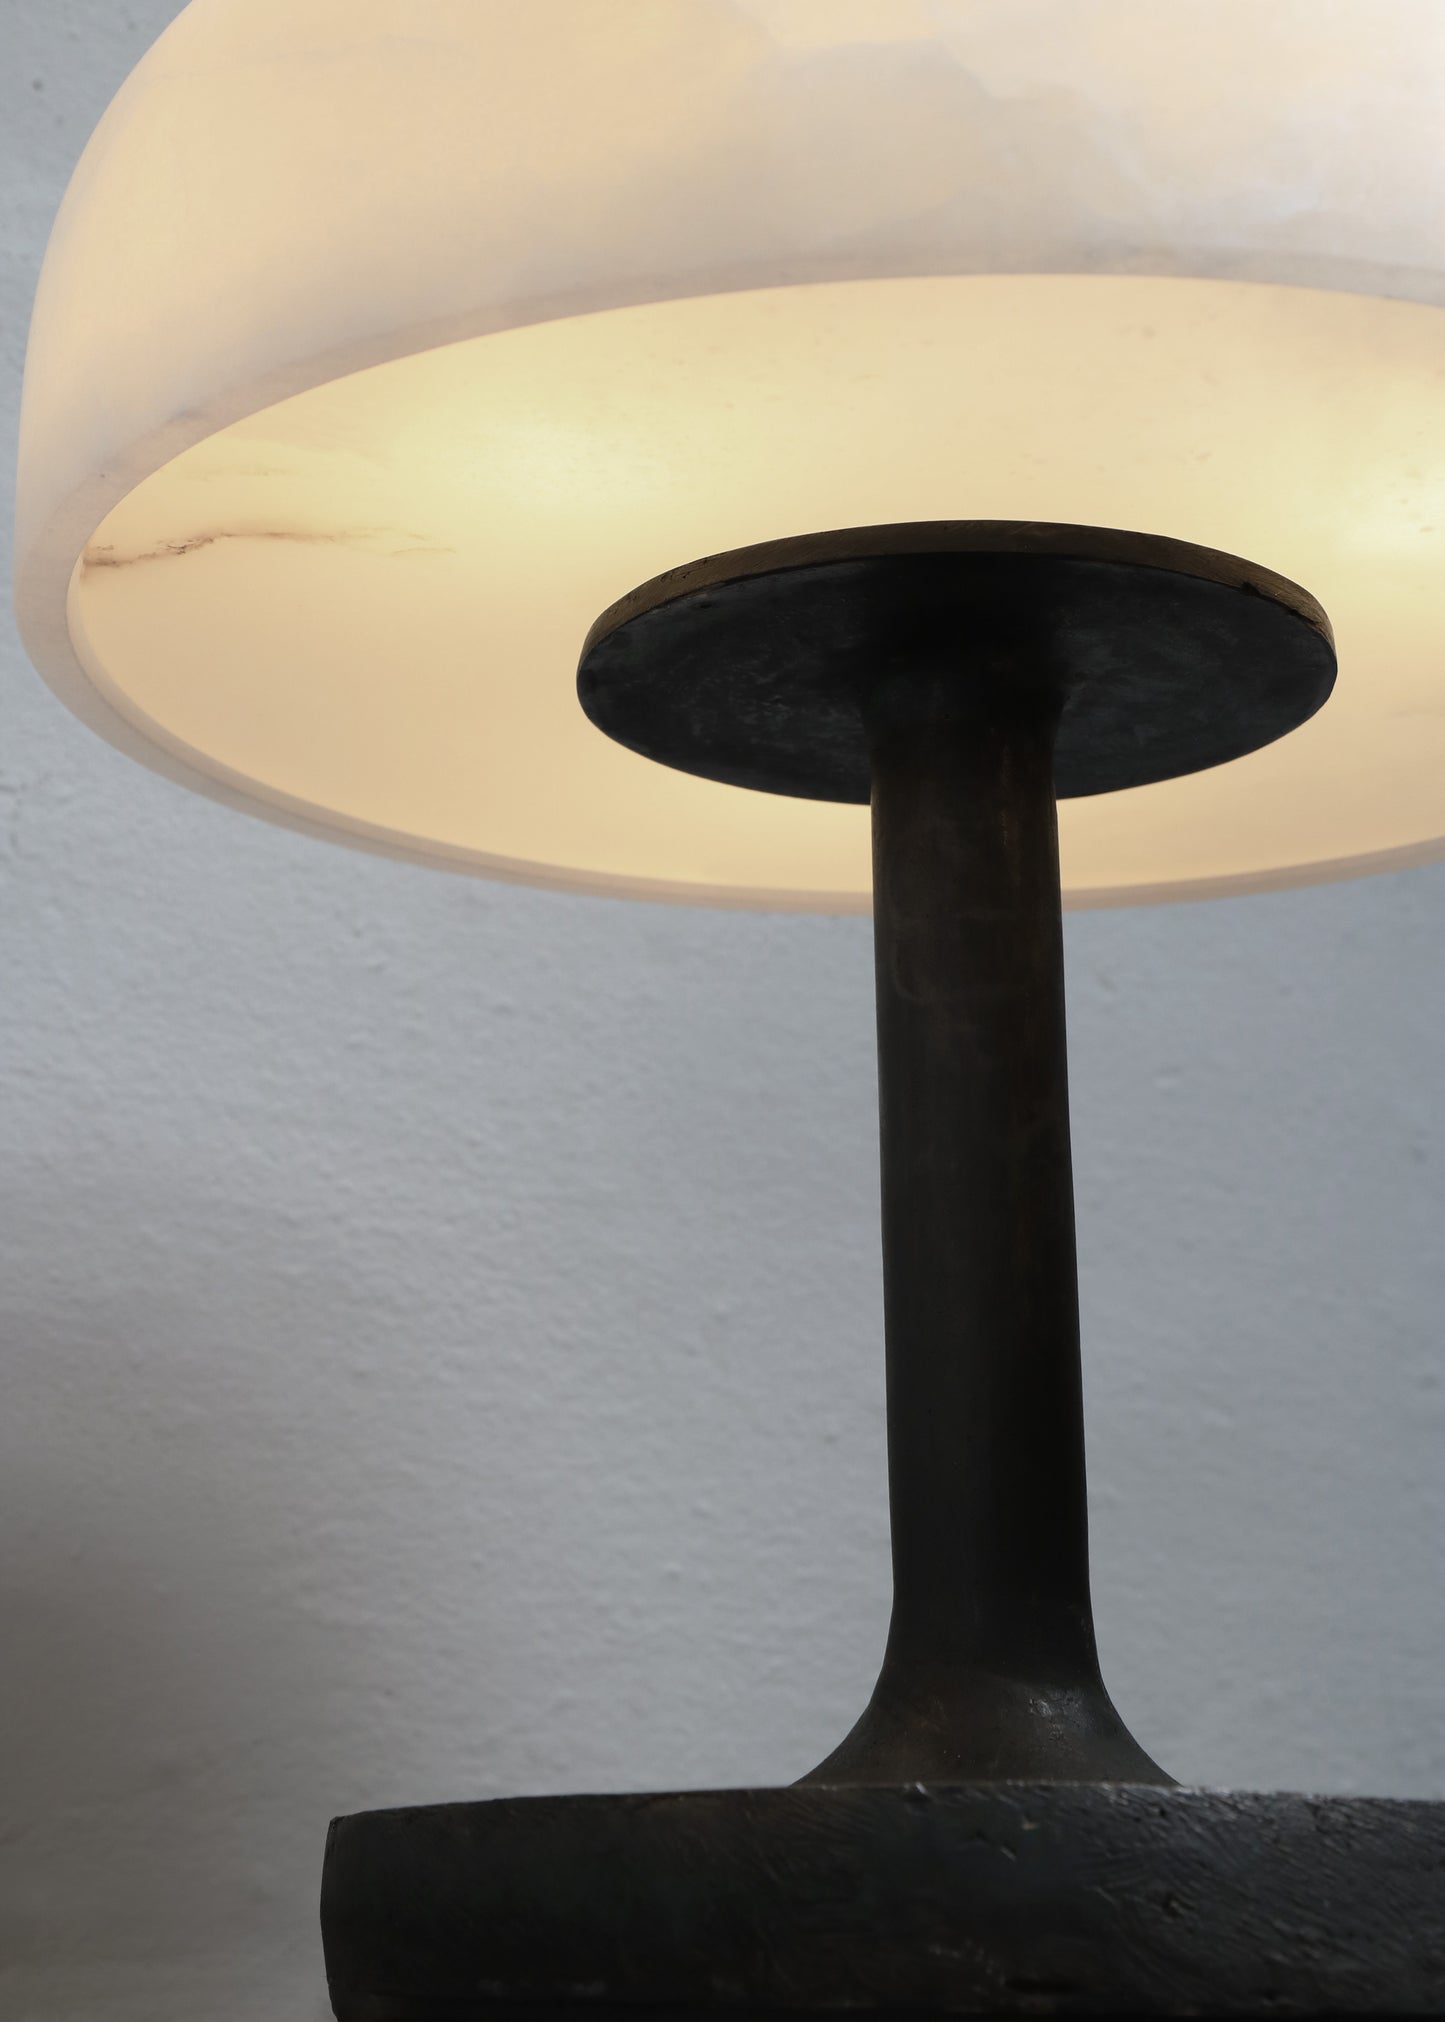 "KUPOLI LAMP SMALL" BY MICHAËL VERHEYDEN